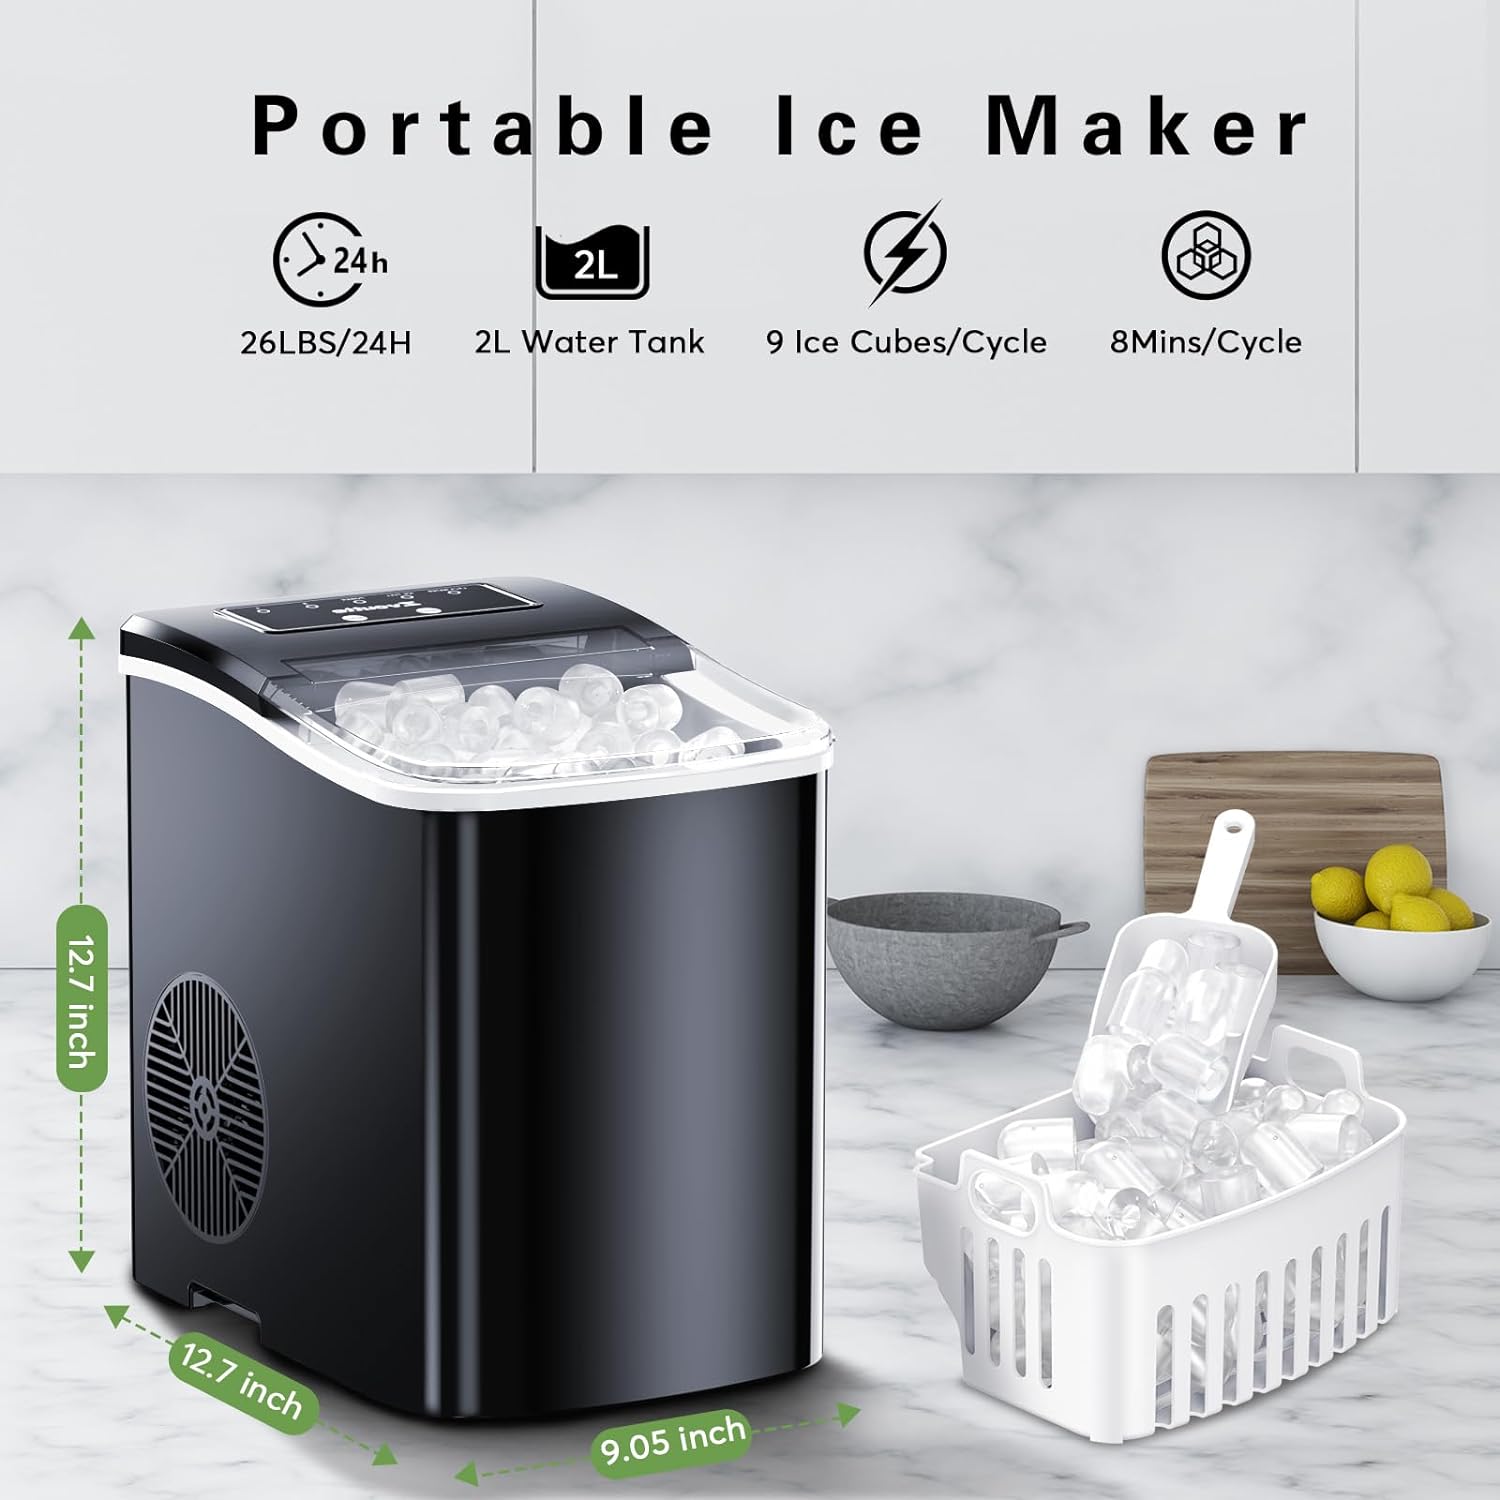 Zvoutte Portable Ice Maker Machine Review